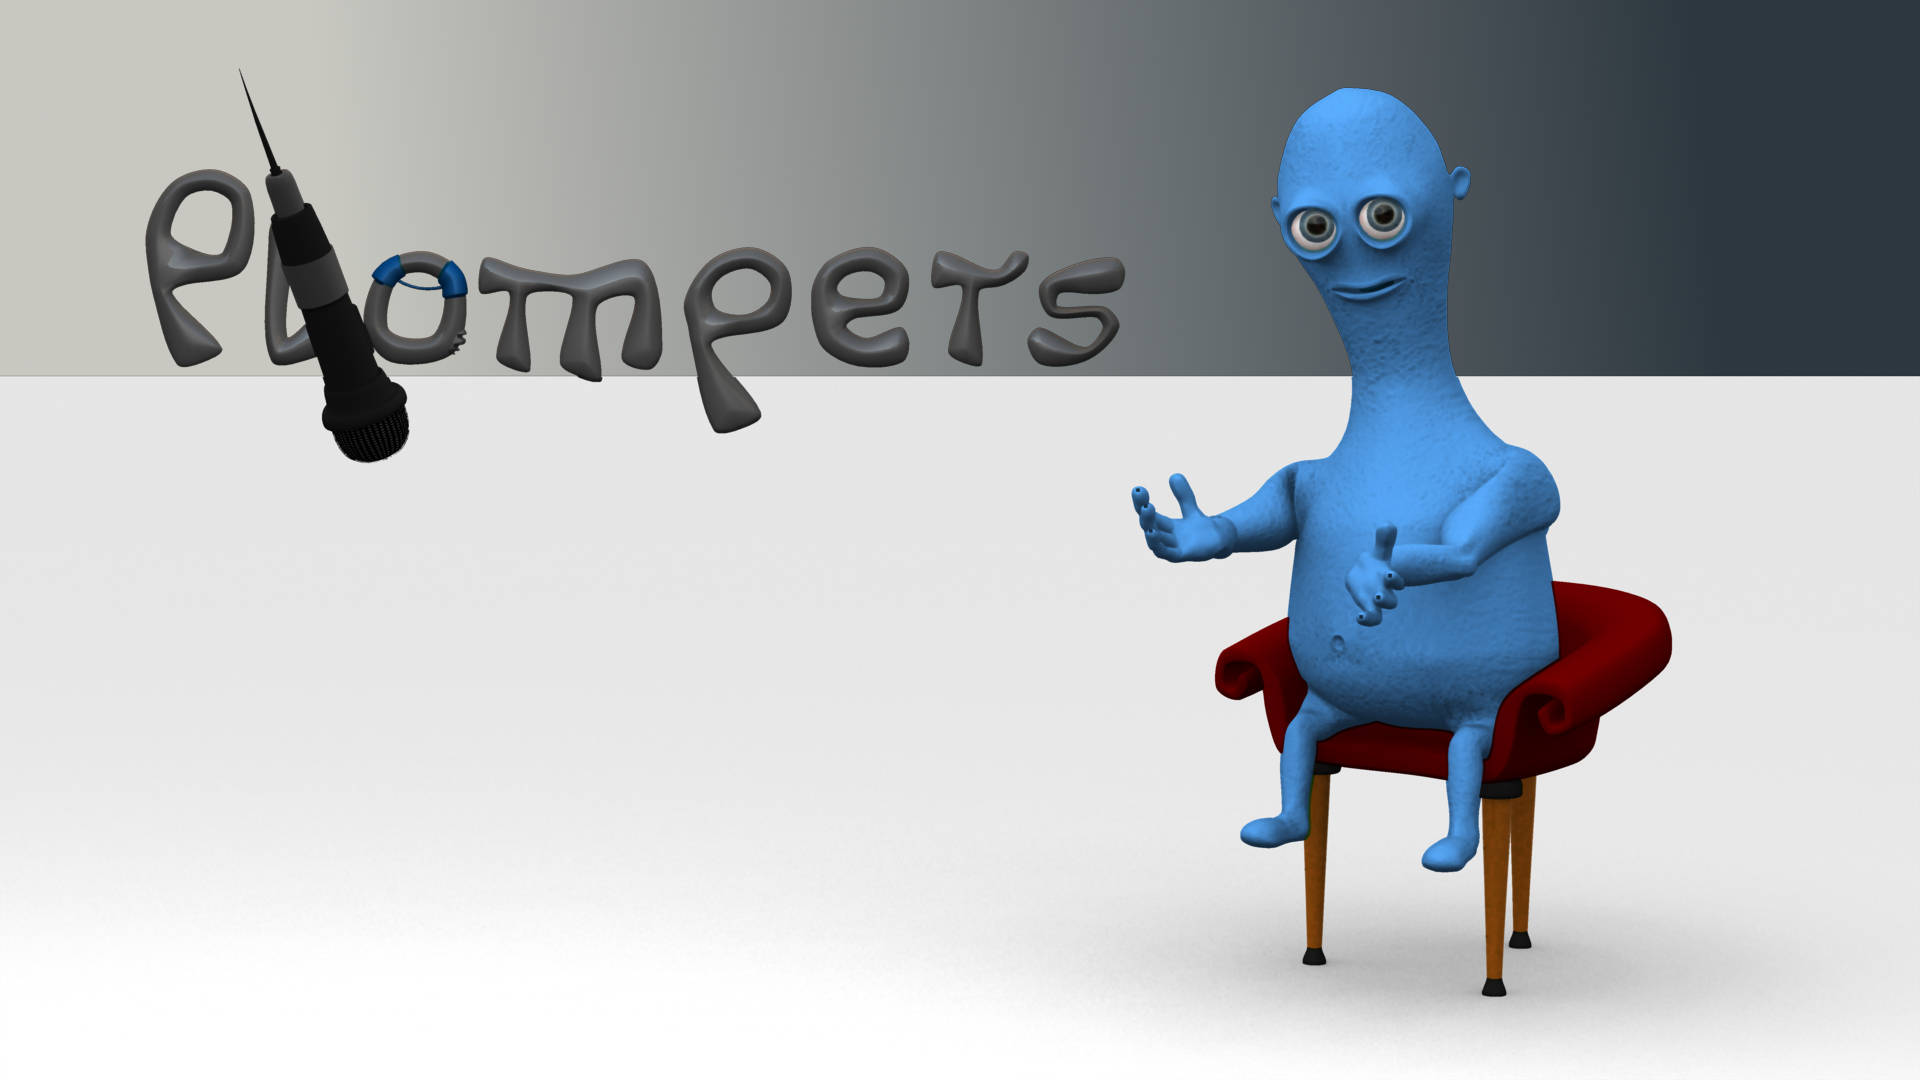 Animation:Master Plompers, kleines blaues Monster